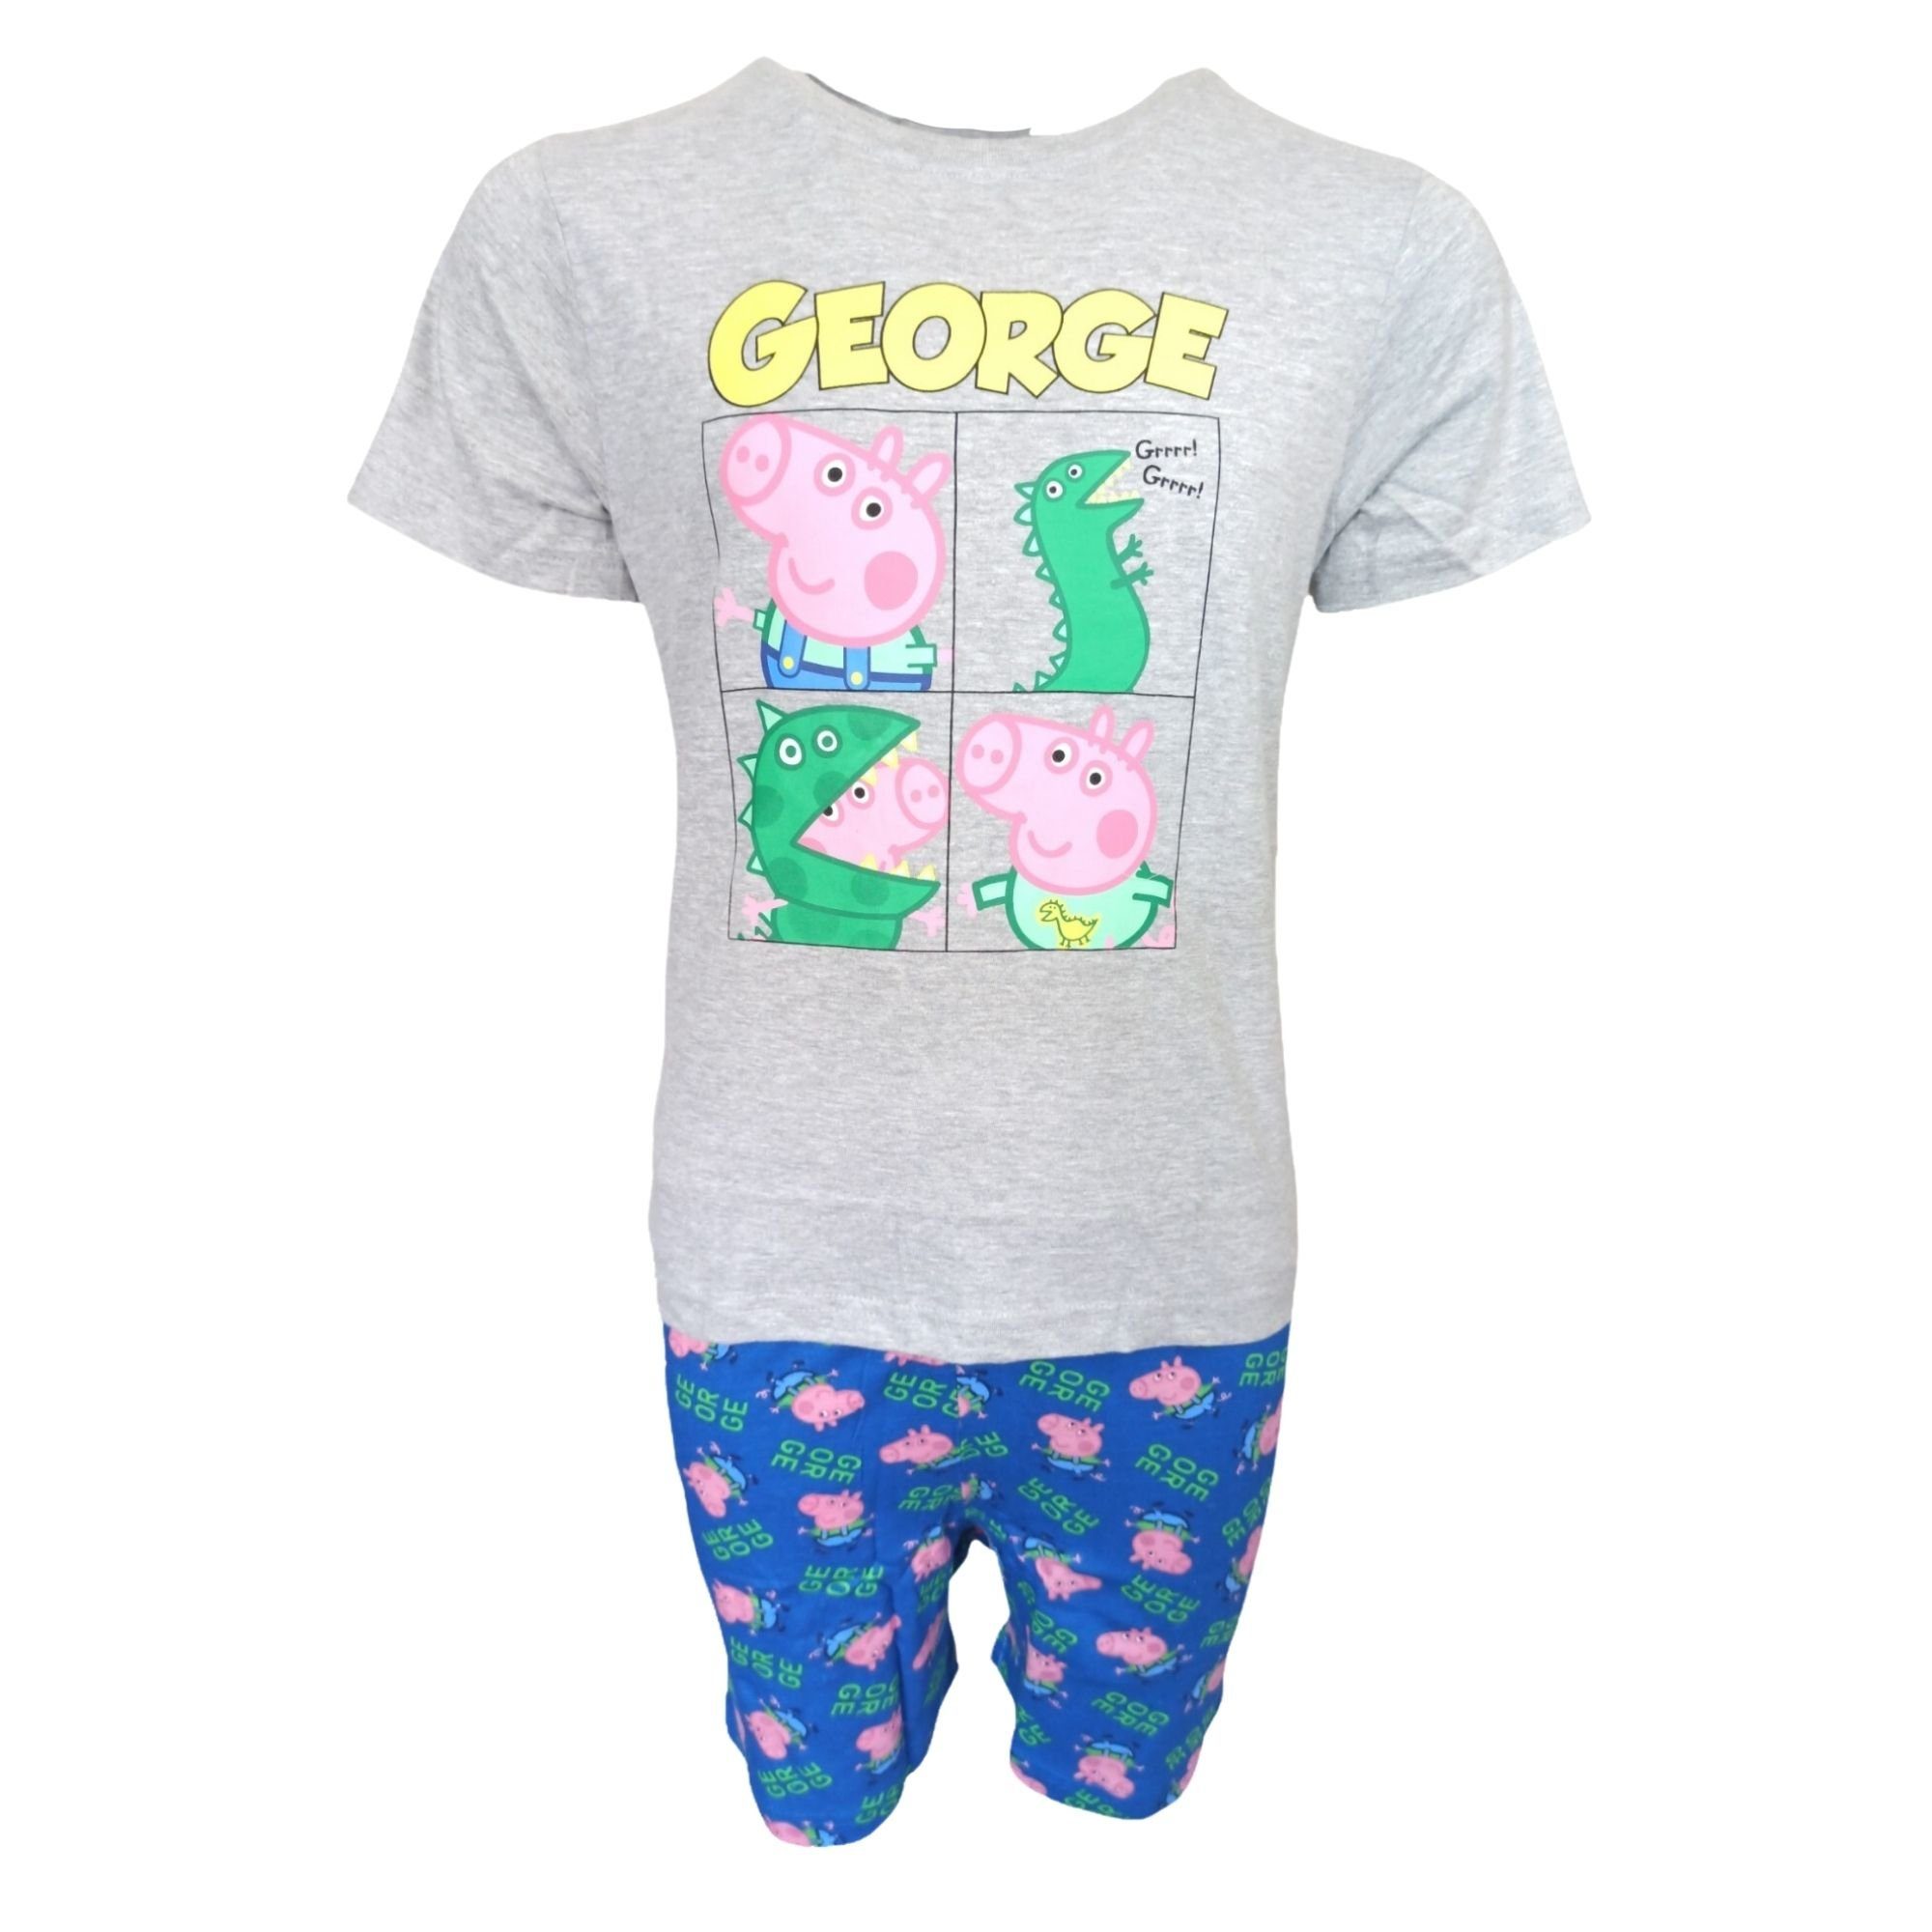 Peppa Pig Schlafanzug George (2 tlg) Kinder Pyjama kurz -Shortama Gr. 104-134 cm Grau-Blau